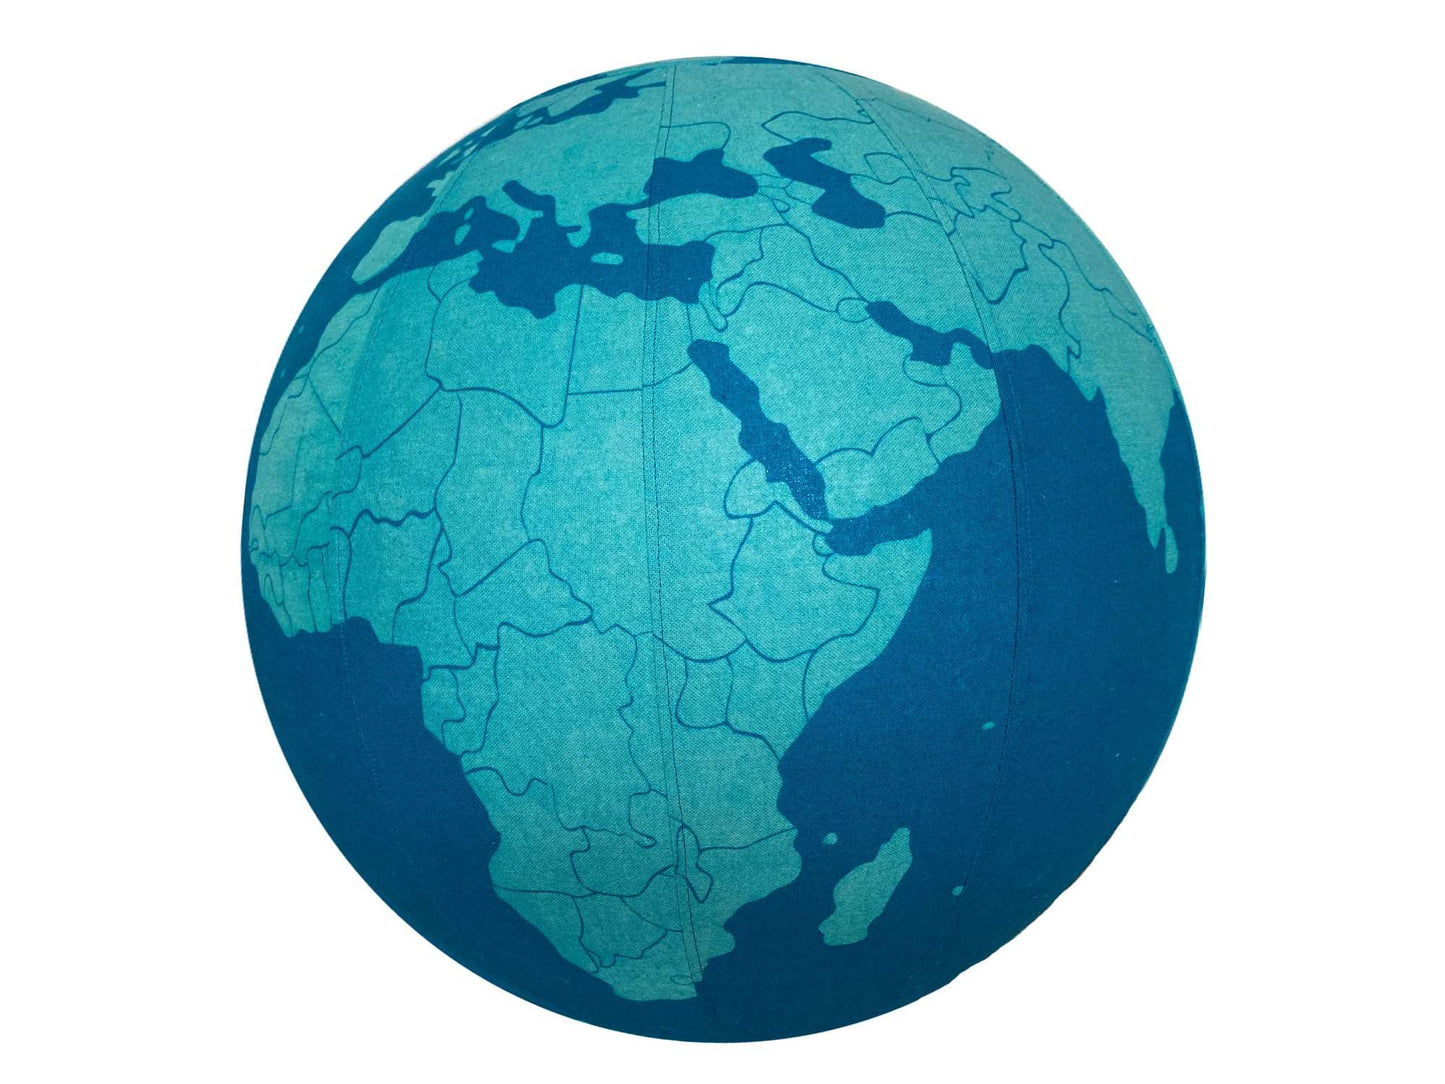 55cm Balance Ball / Yoga Ball Cover: GLOBE, Earth, The World